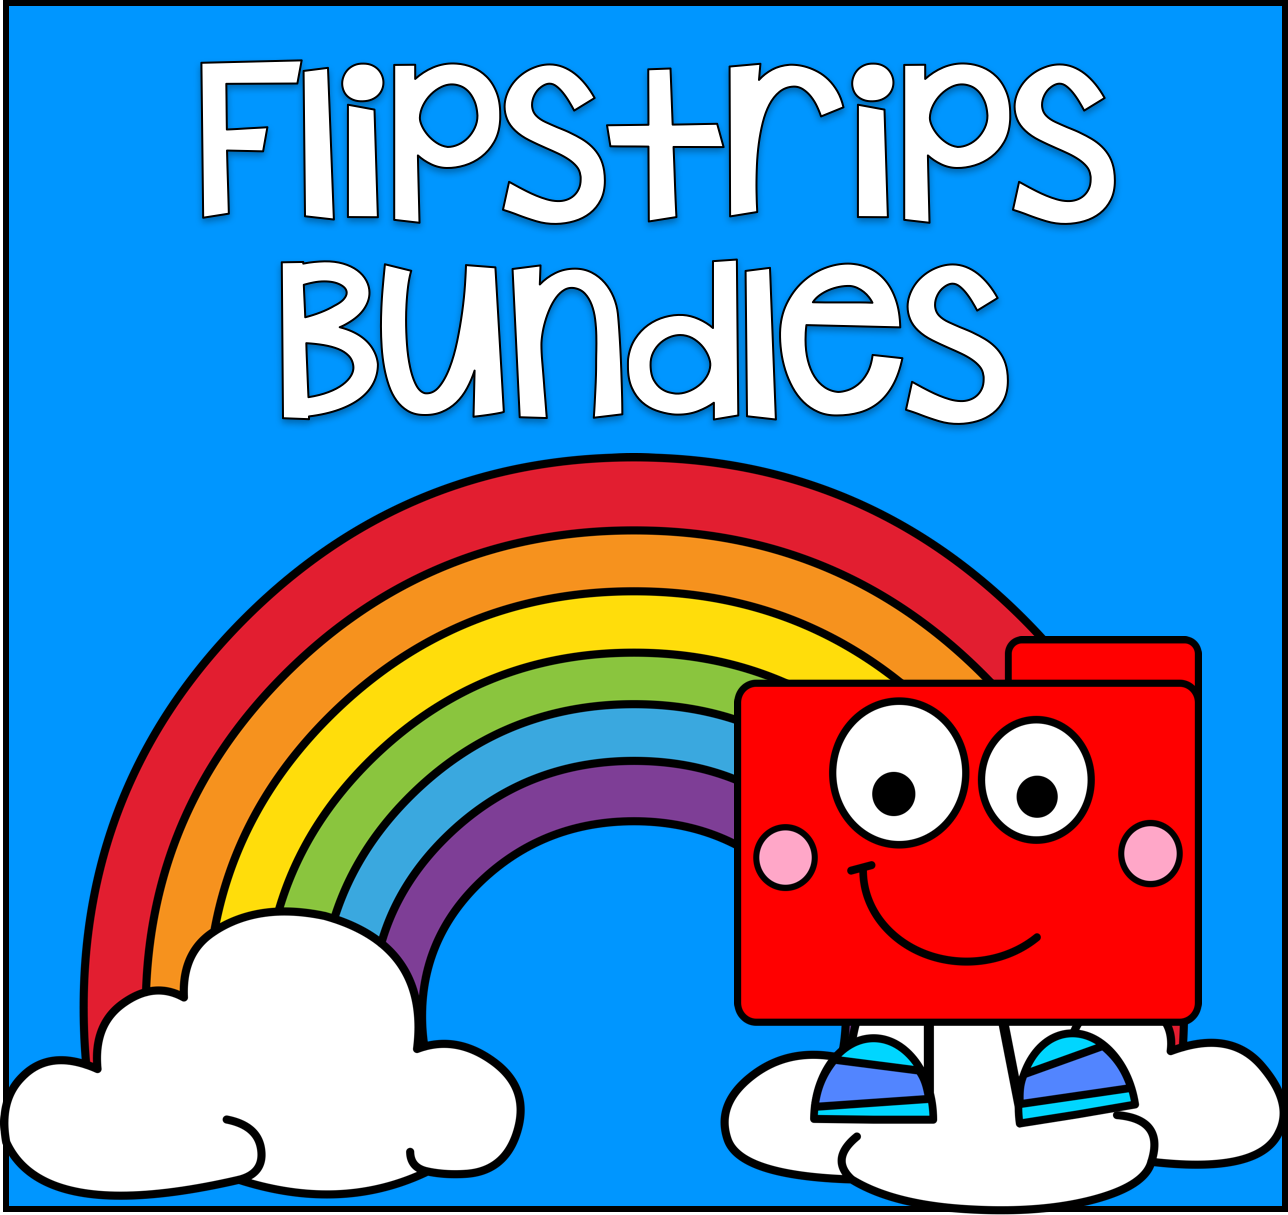 Flipstrips Bundles